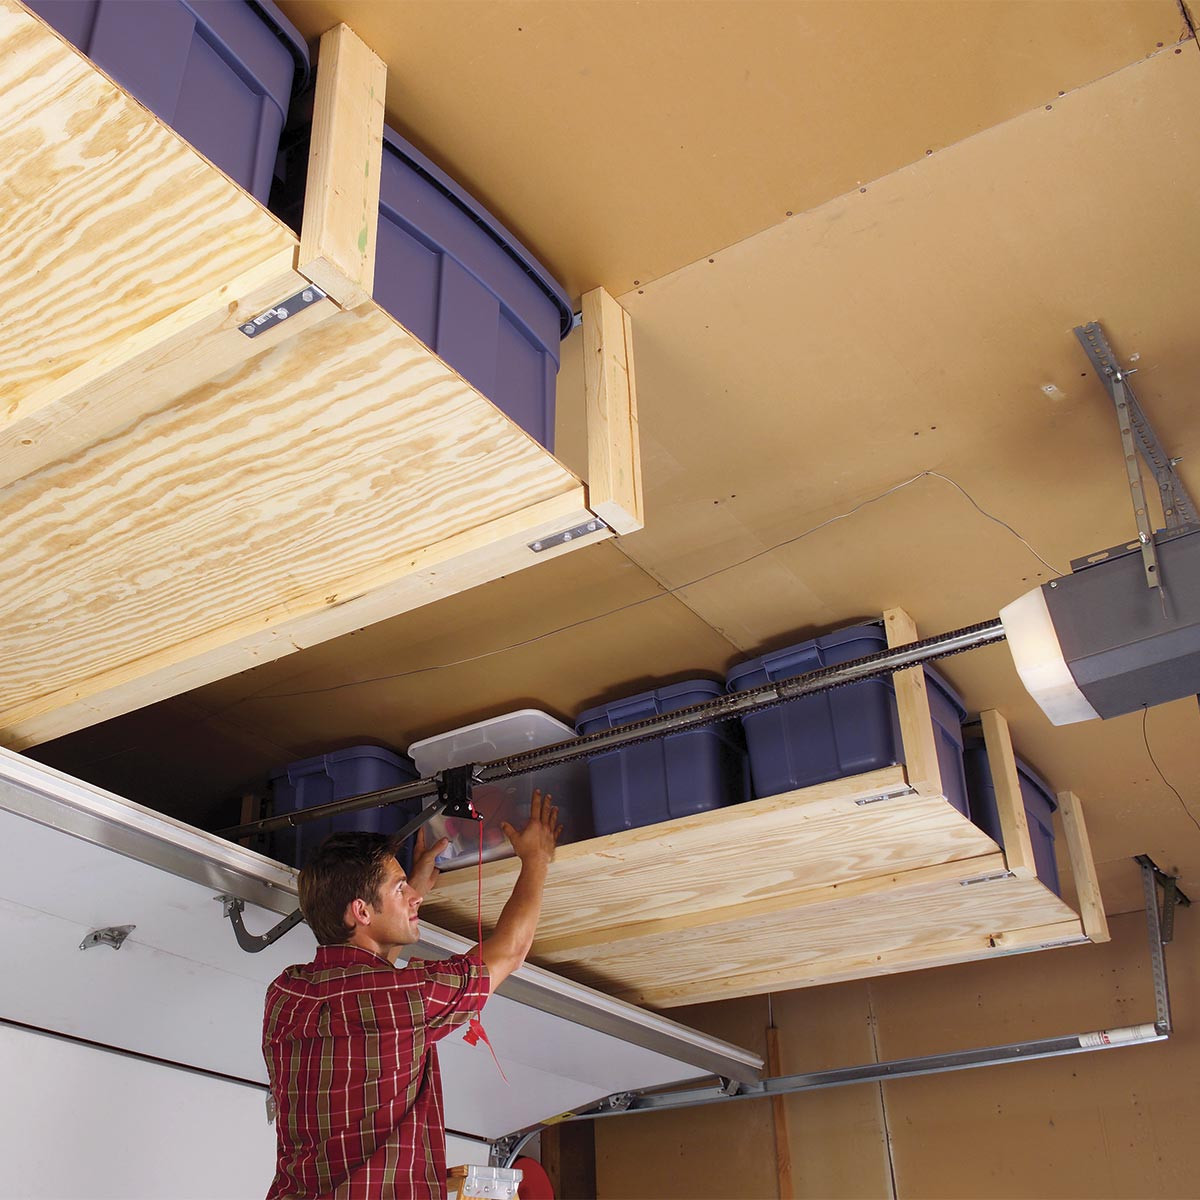 DIY Overhead Garage Storage Plans
 16 Cheap Garage Storage Projects You Can DIY